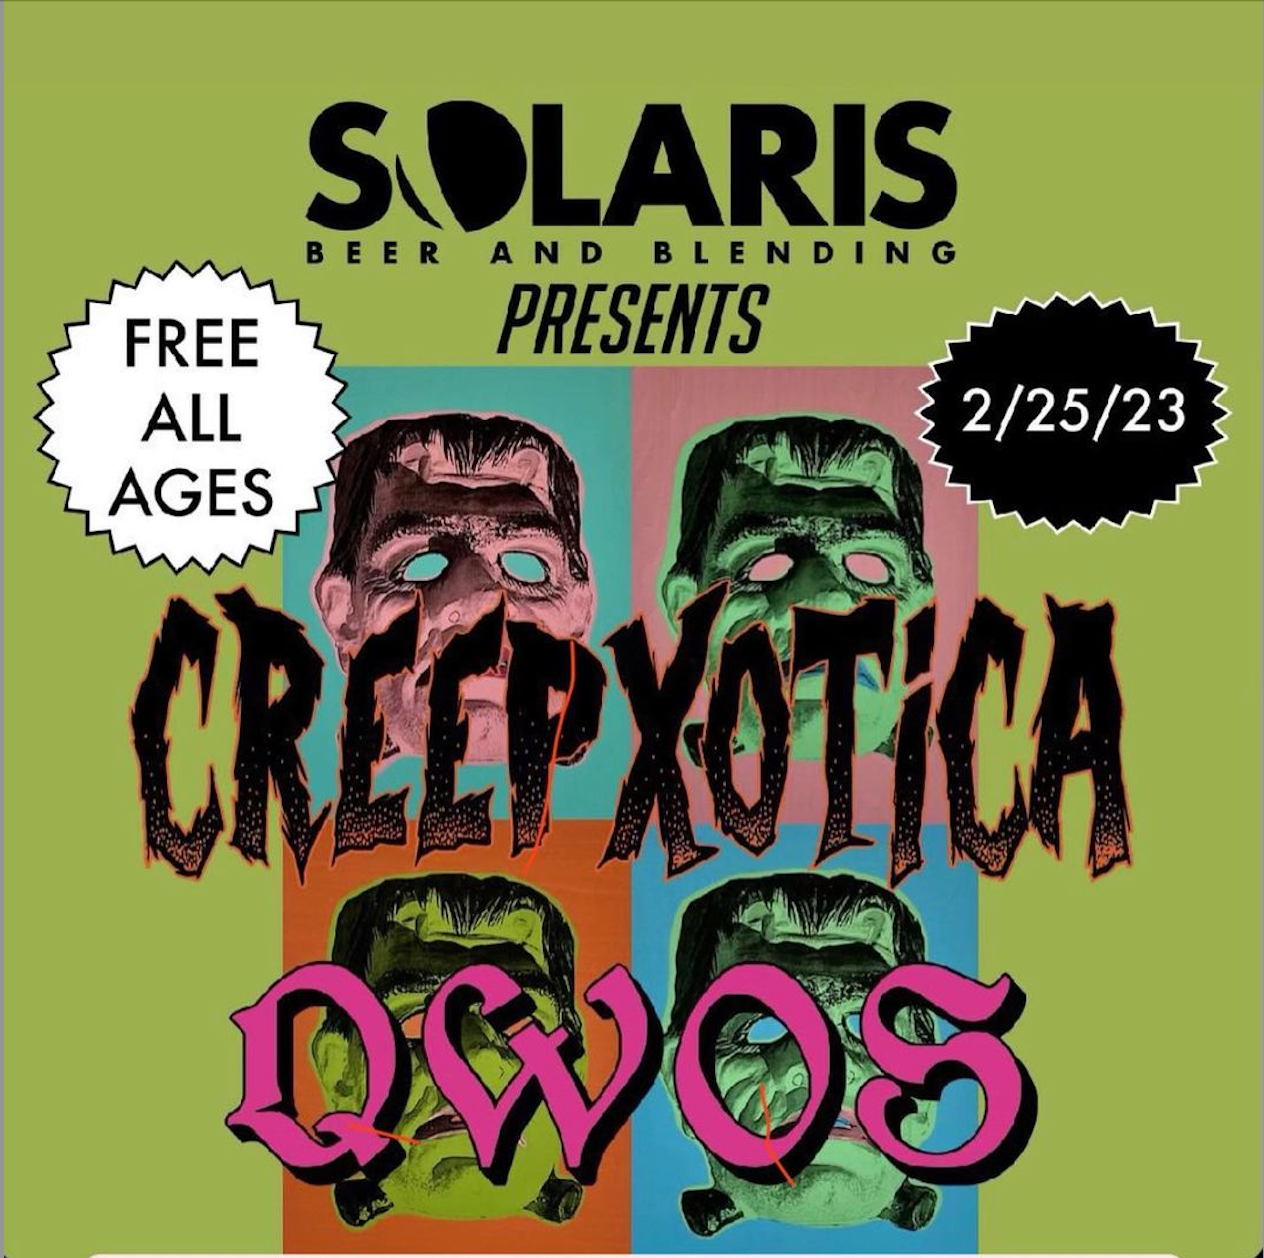 Creepxotica at Solaris